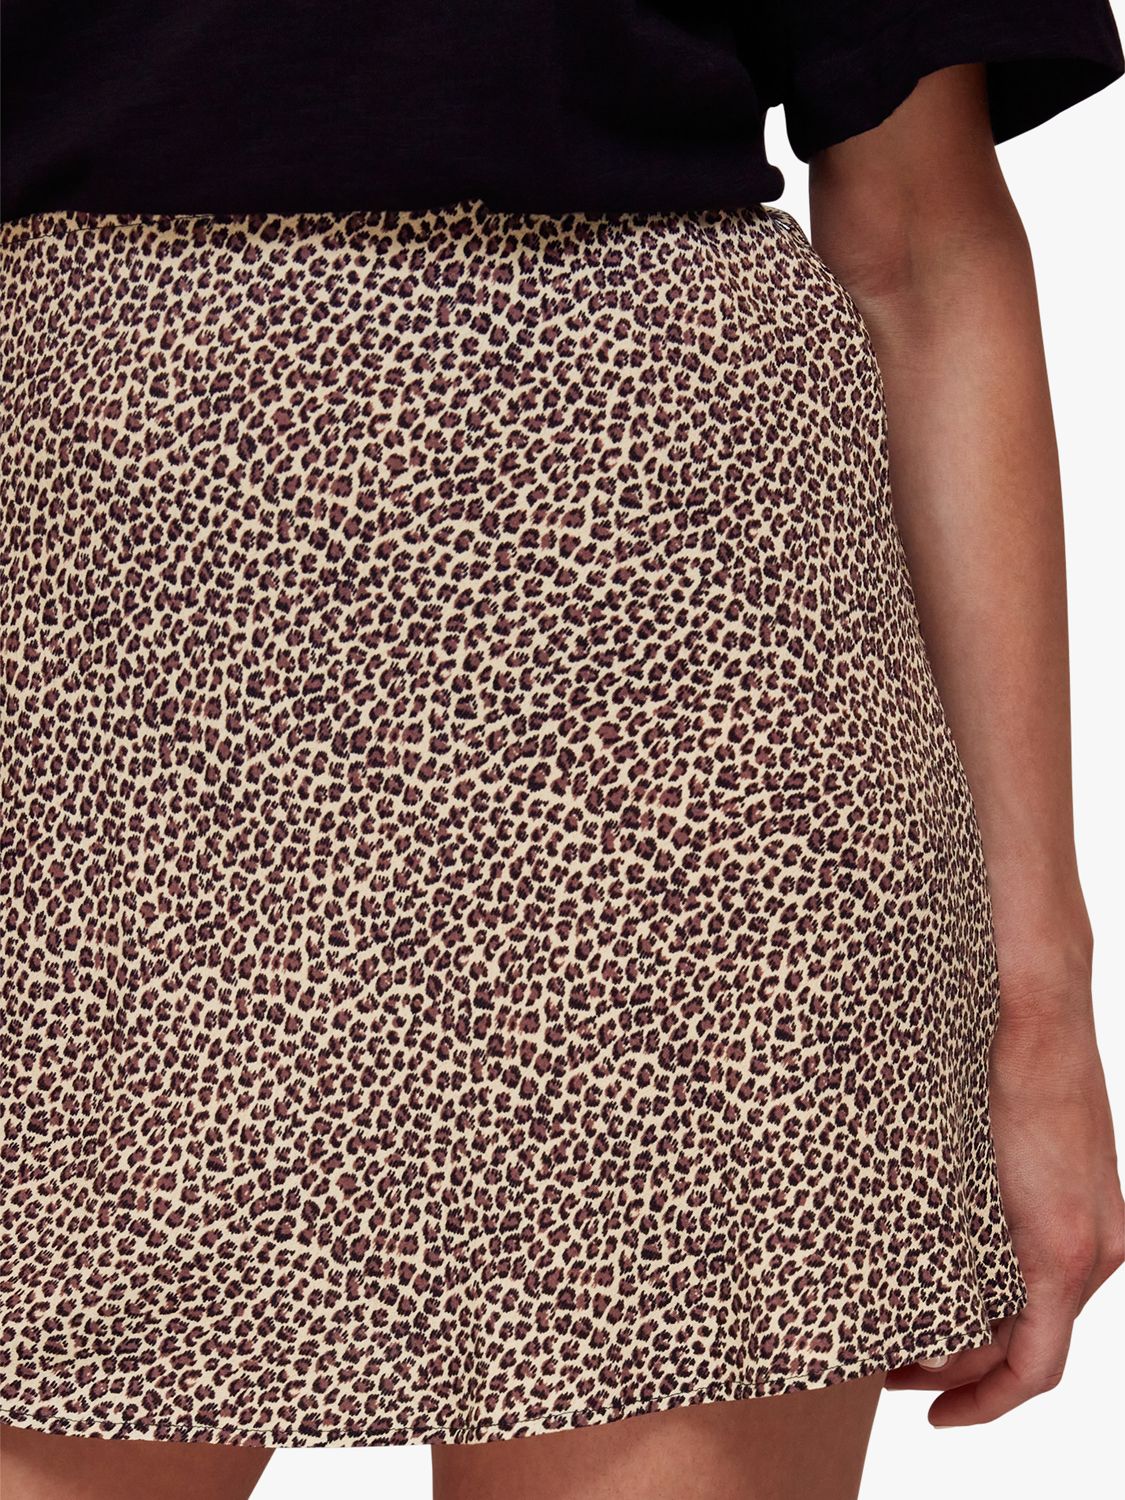 Whistles Petite Dashed Leopard Print Mini Skirt, Brown/Multi, 12